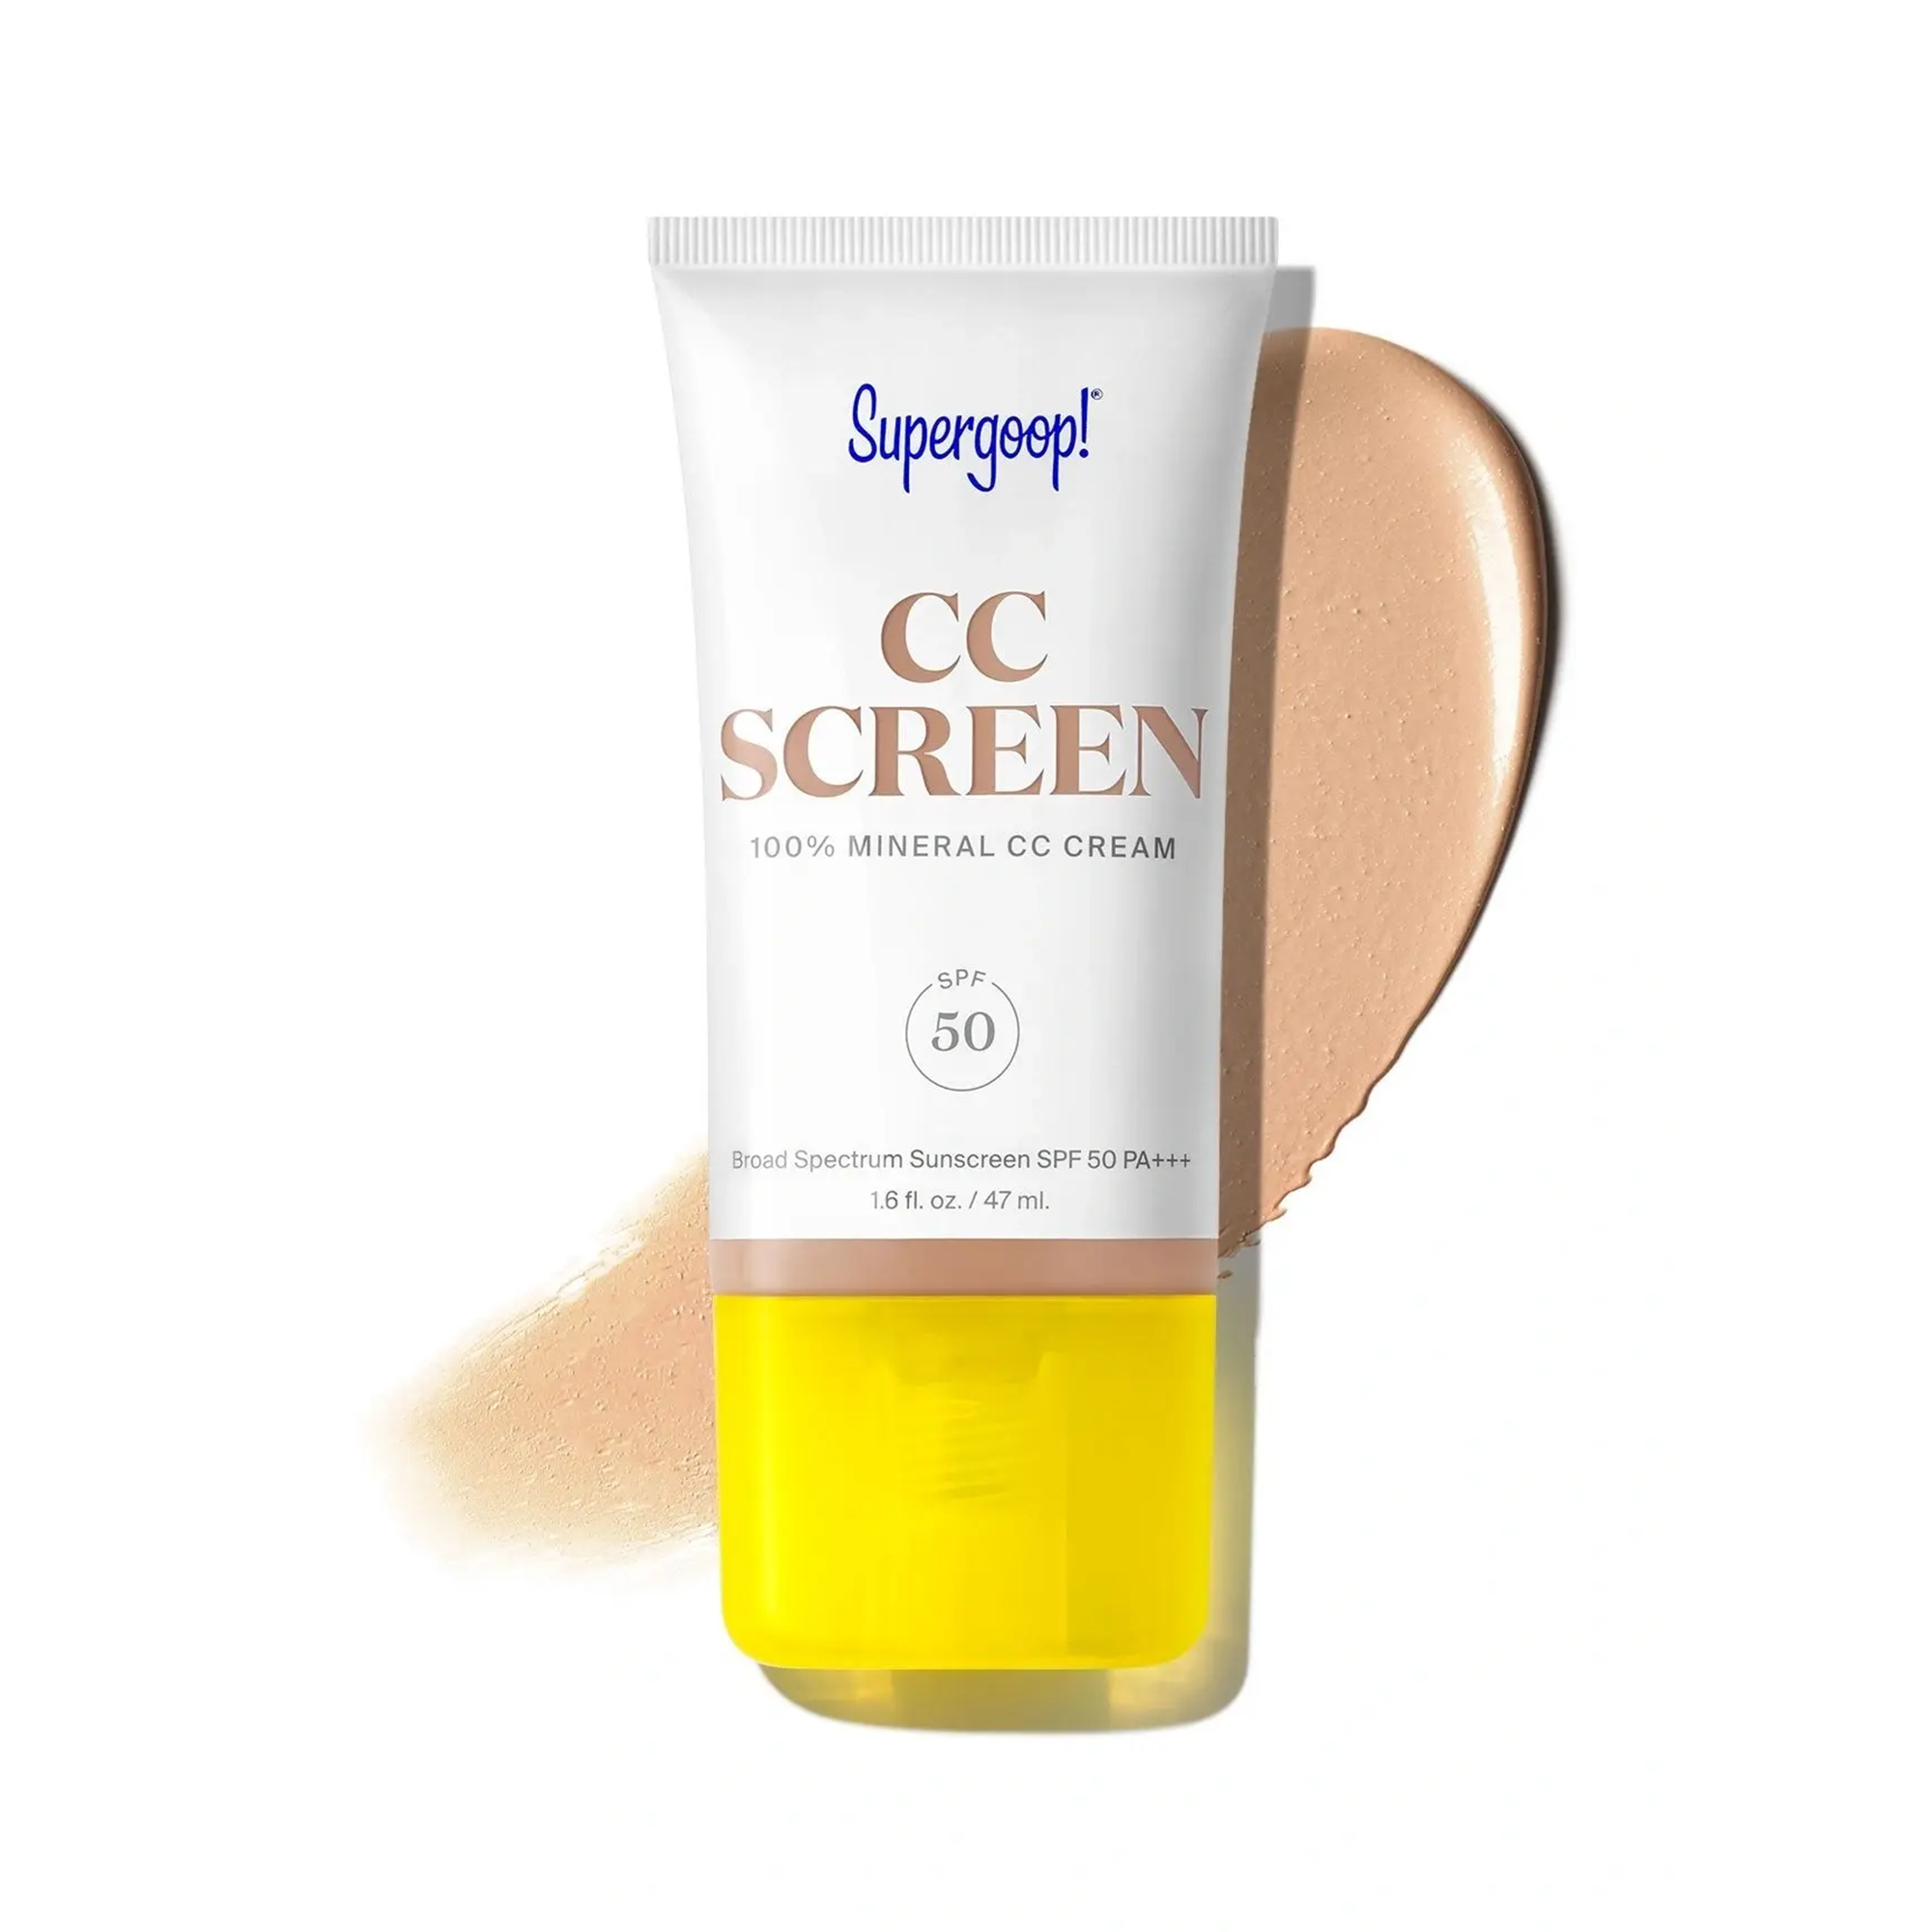 Supergoop! CC Screen 100% Mineral CC Cream SPF 50 / 215N